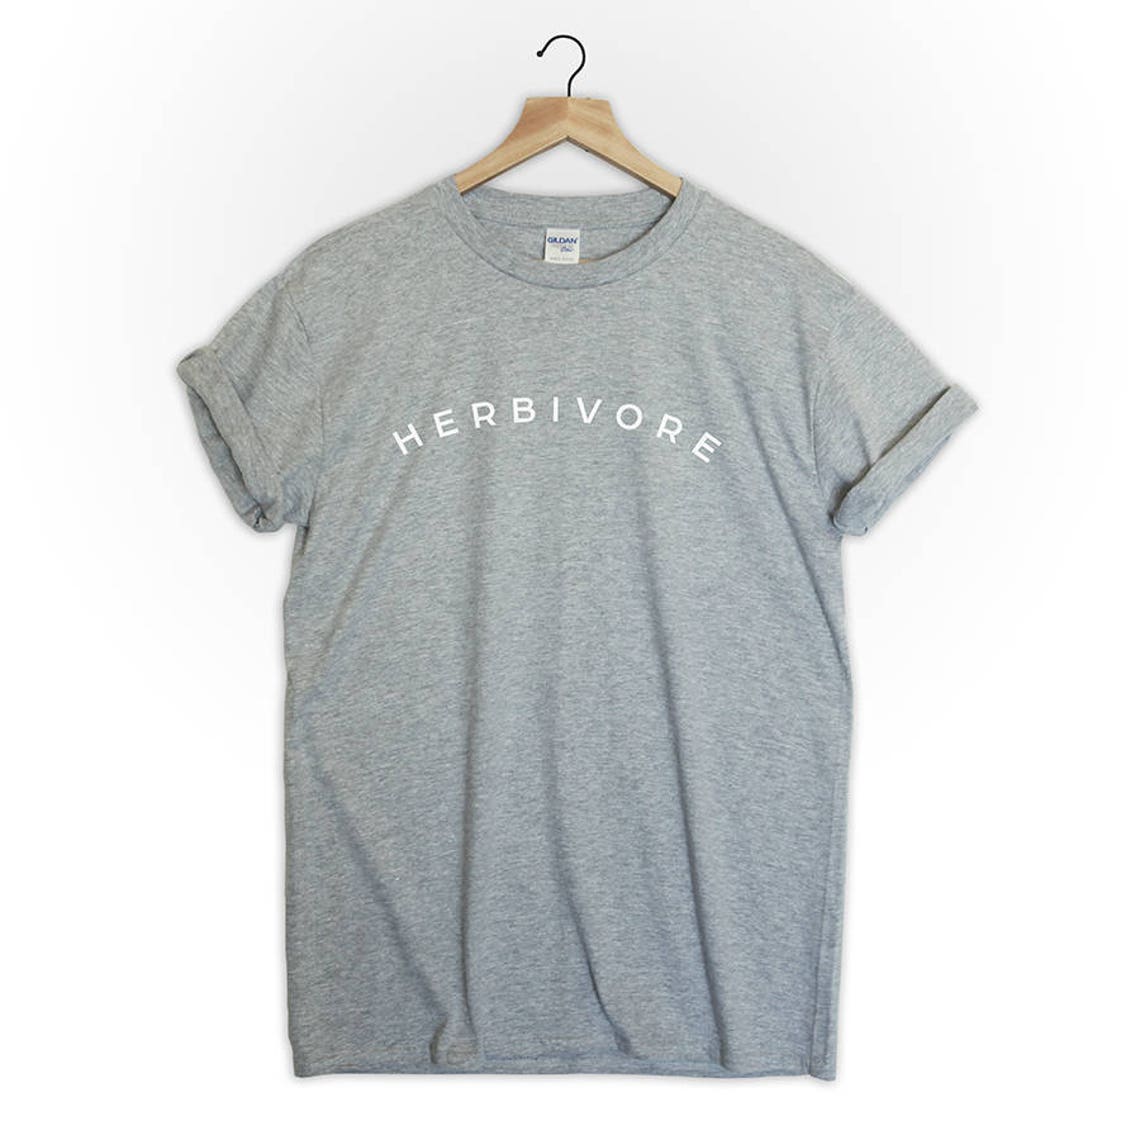 HERBIVORE Tshirt Shirt Tee Top Vegan Vegeterian Graphic Tumblr | Etsy